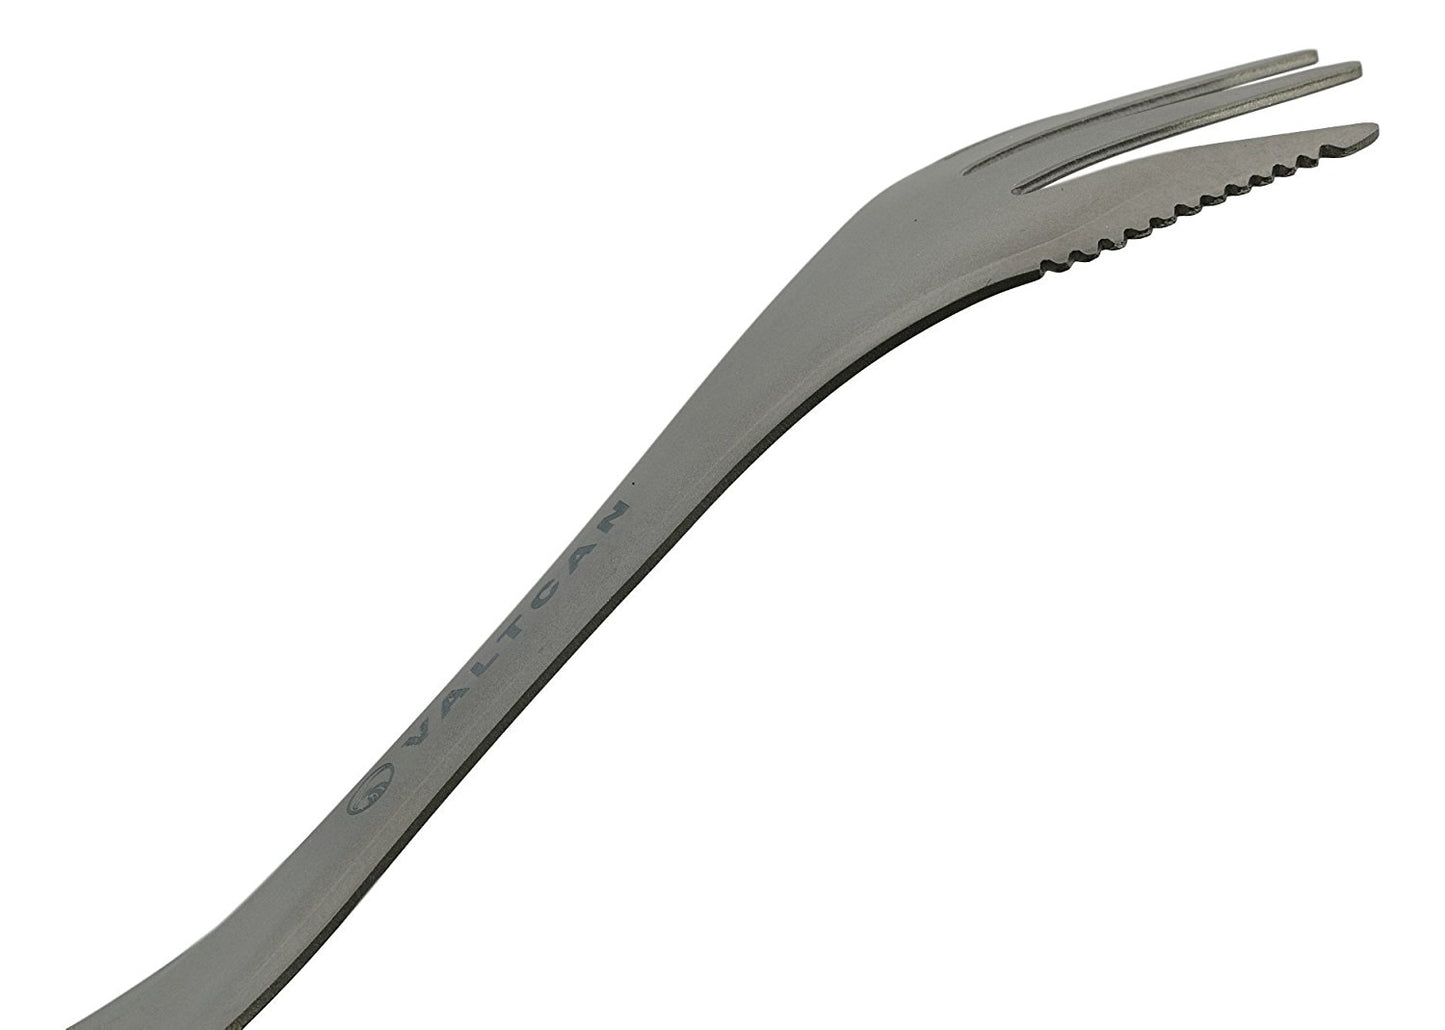 VALTCAN Titanium Spork 3-in-1 Fork Spoon Knife Essential Camping Flatware